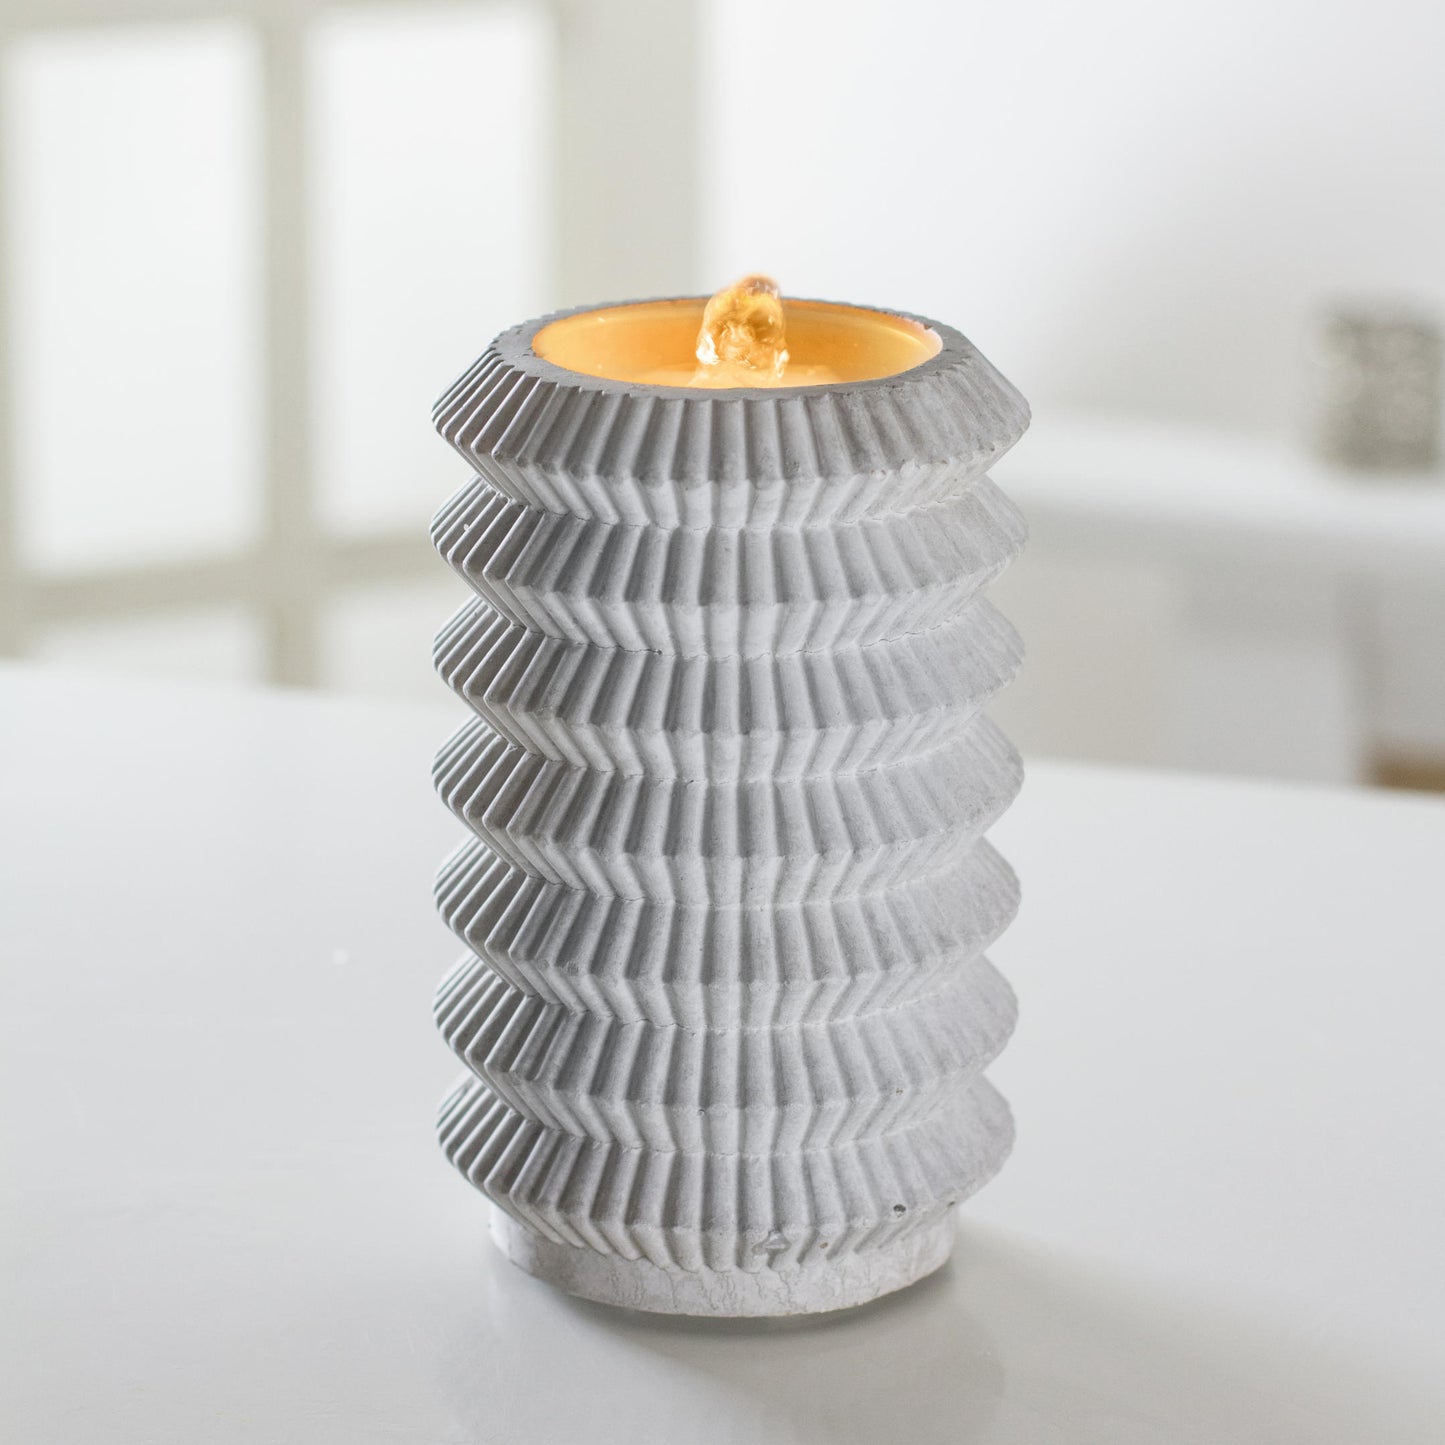 Šedá betónová vodná sviečka Grey Bubbling Water Candle - relaxujte a meditujte s príjemnou atmosférou